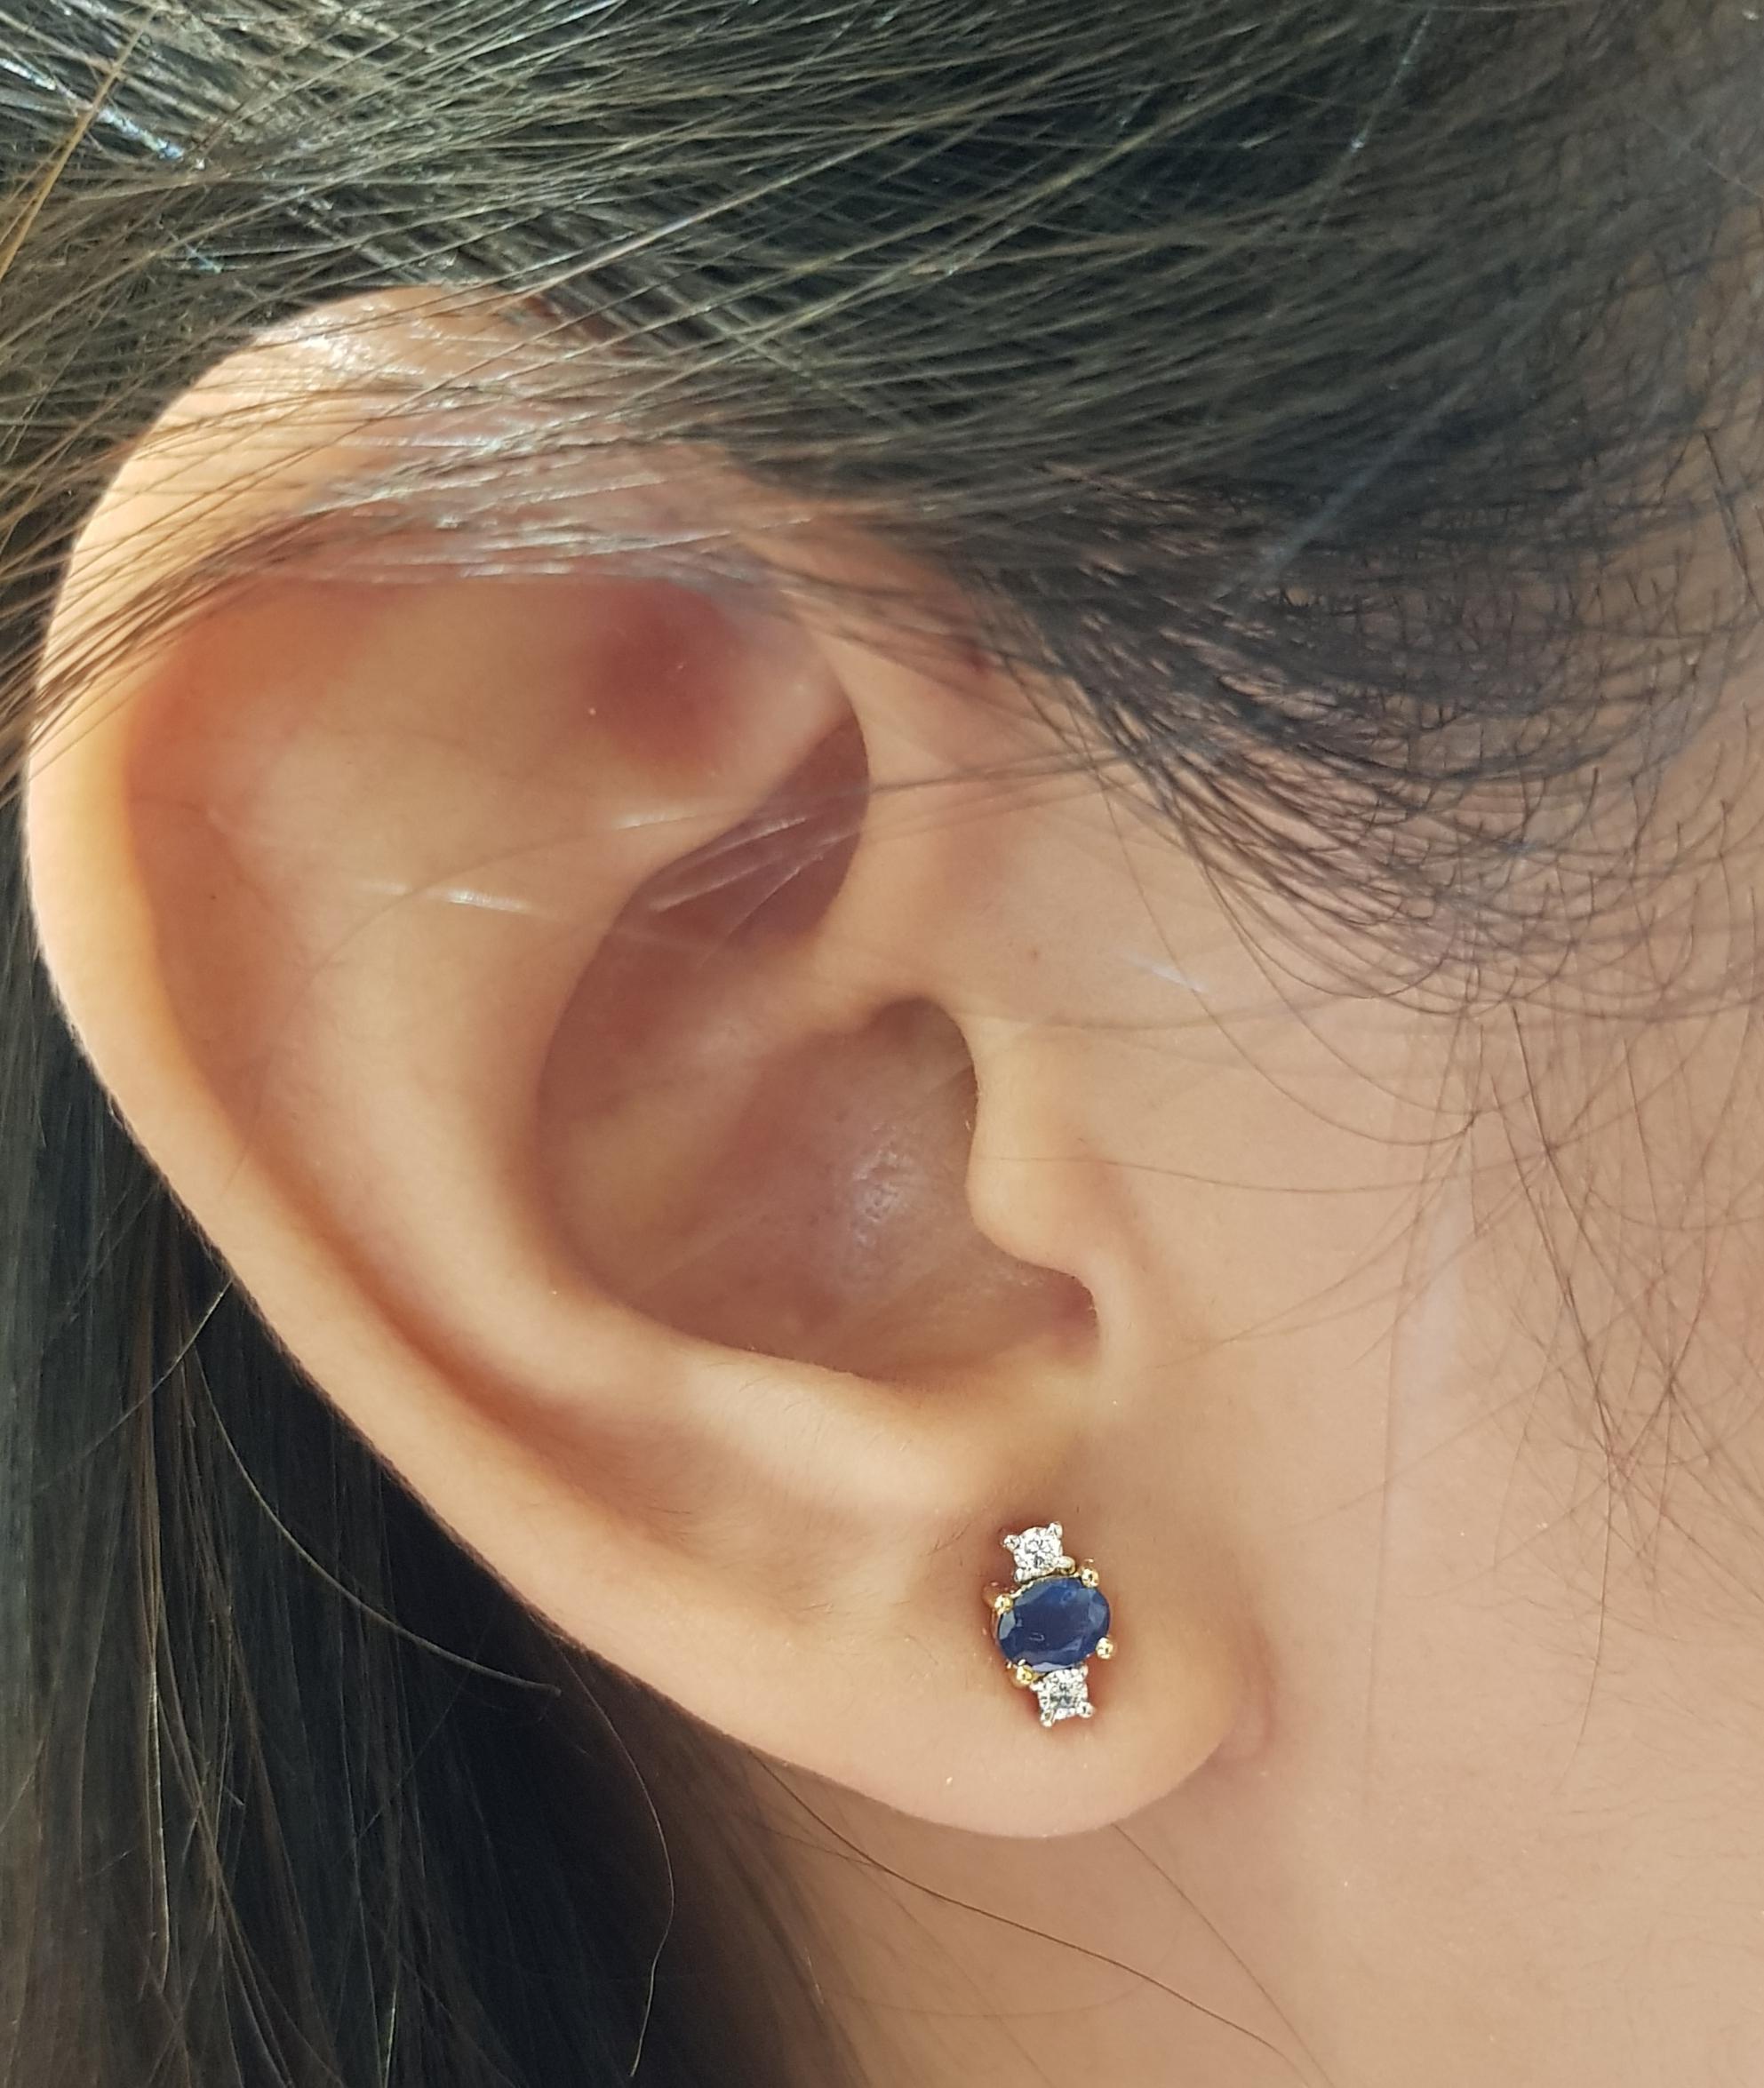 Blue Sapphire 0.68 carat with Diamond 0.09 carat Earrings set in 18 Karat Gold Settings

Width:  0.4 cm 
Length:  0.8 cm
Total Weight: 2.23 grams

